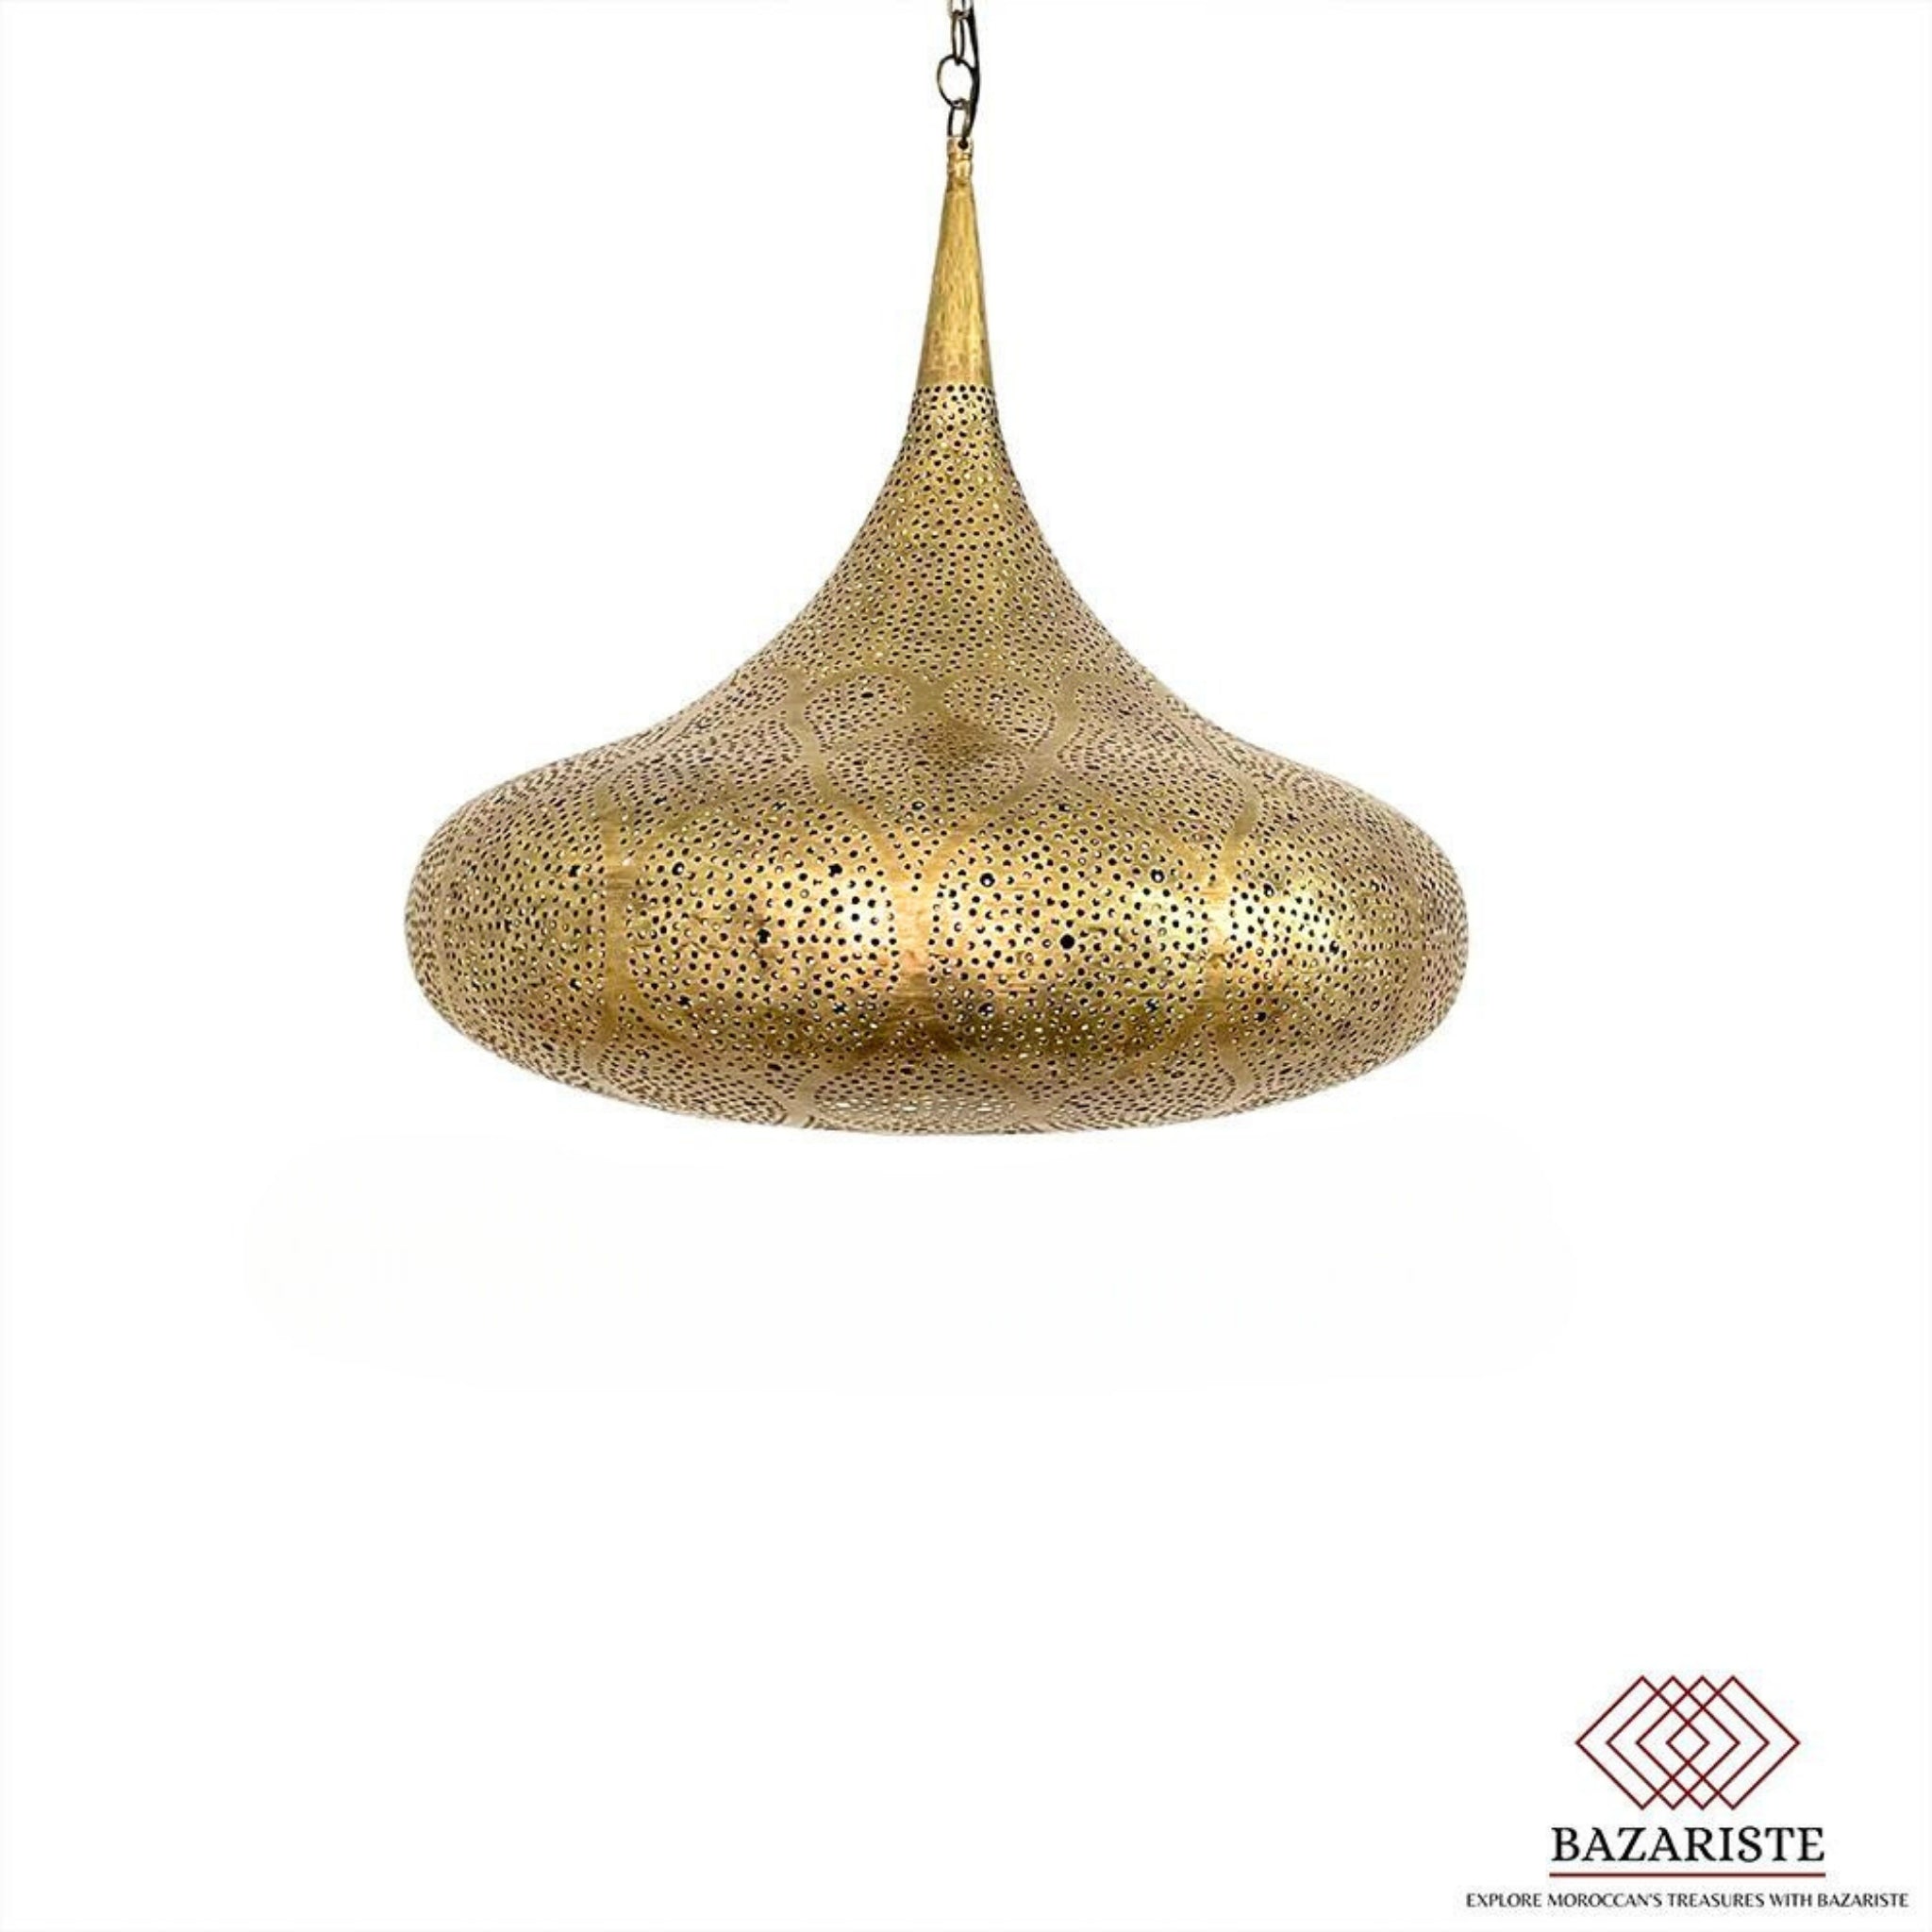 Moroccan Pendant Light, Ceiling Light Fixture, Hanging Lampshade Light, Brass Lantern Pendant.